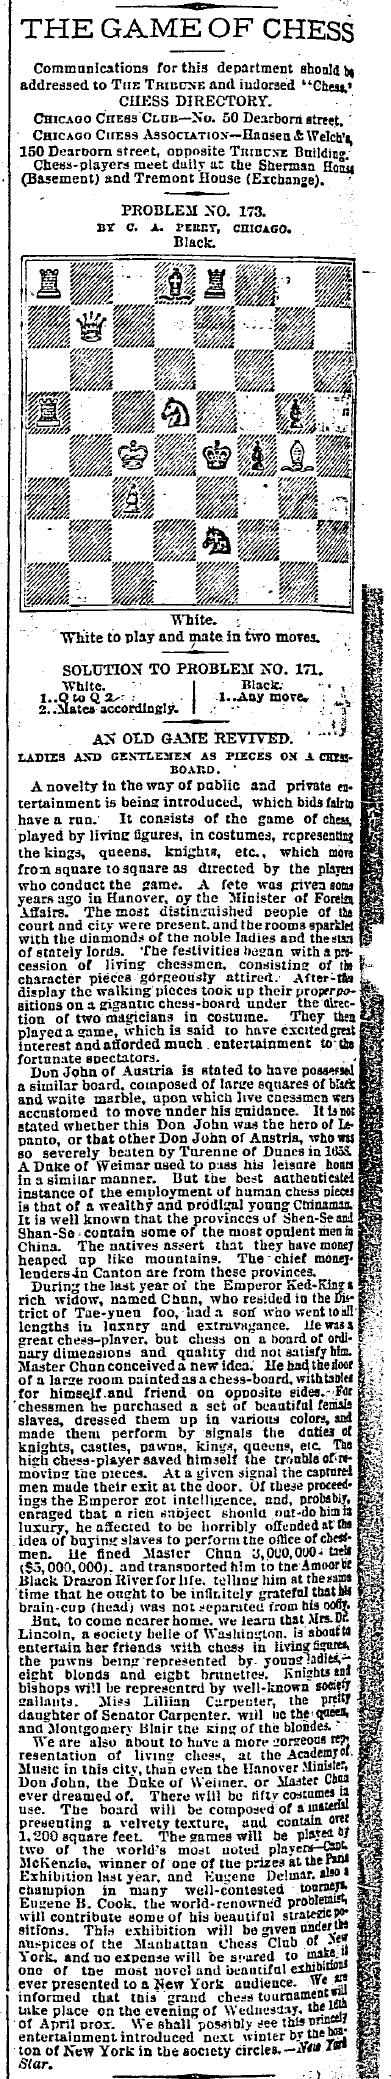 1879.04.06-01 Chicago Tribune.jpg